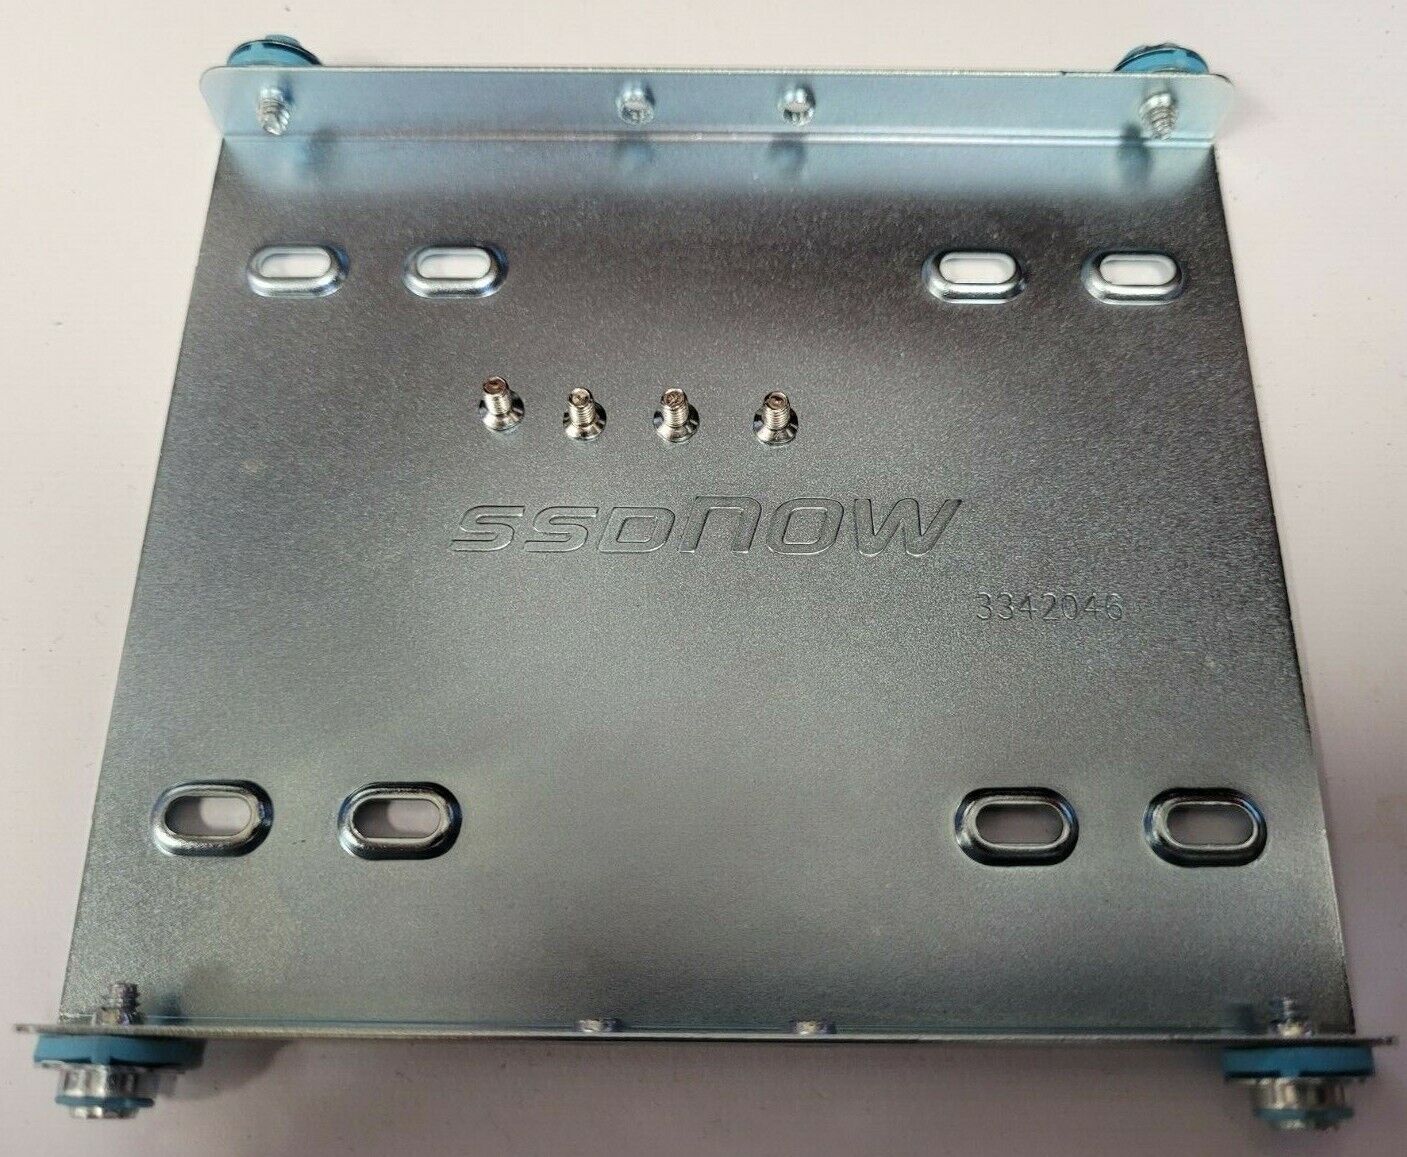 Adaptador SSDNOW 2,5"" a 3,5"" SATA SSD bandeja caddy 3342046